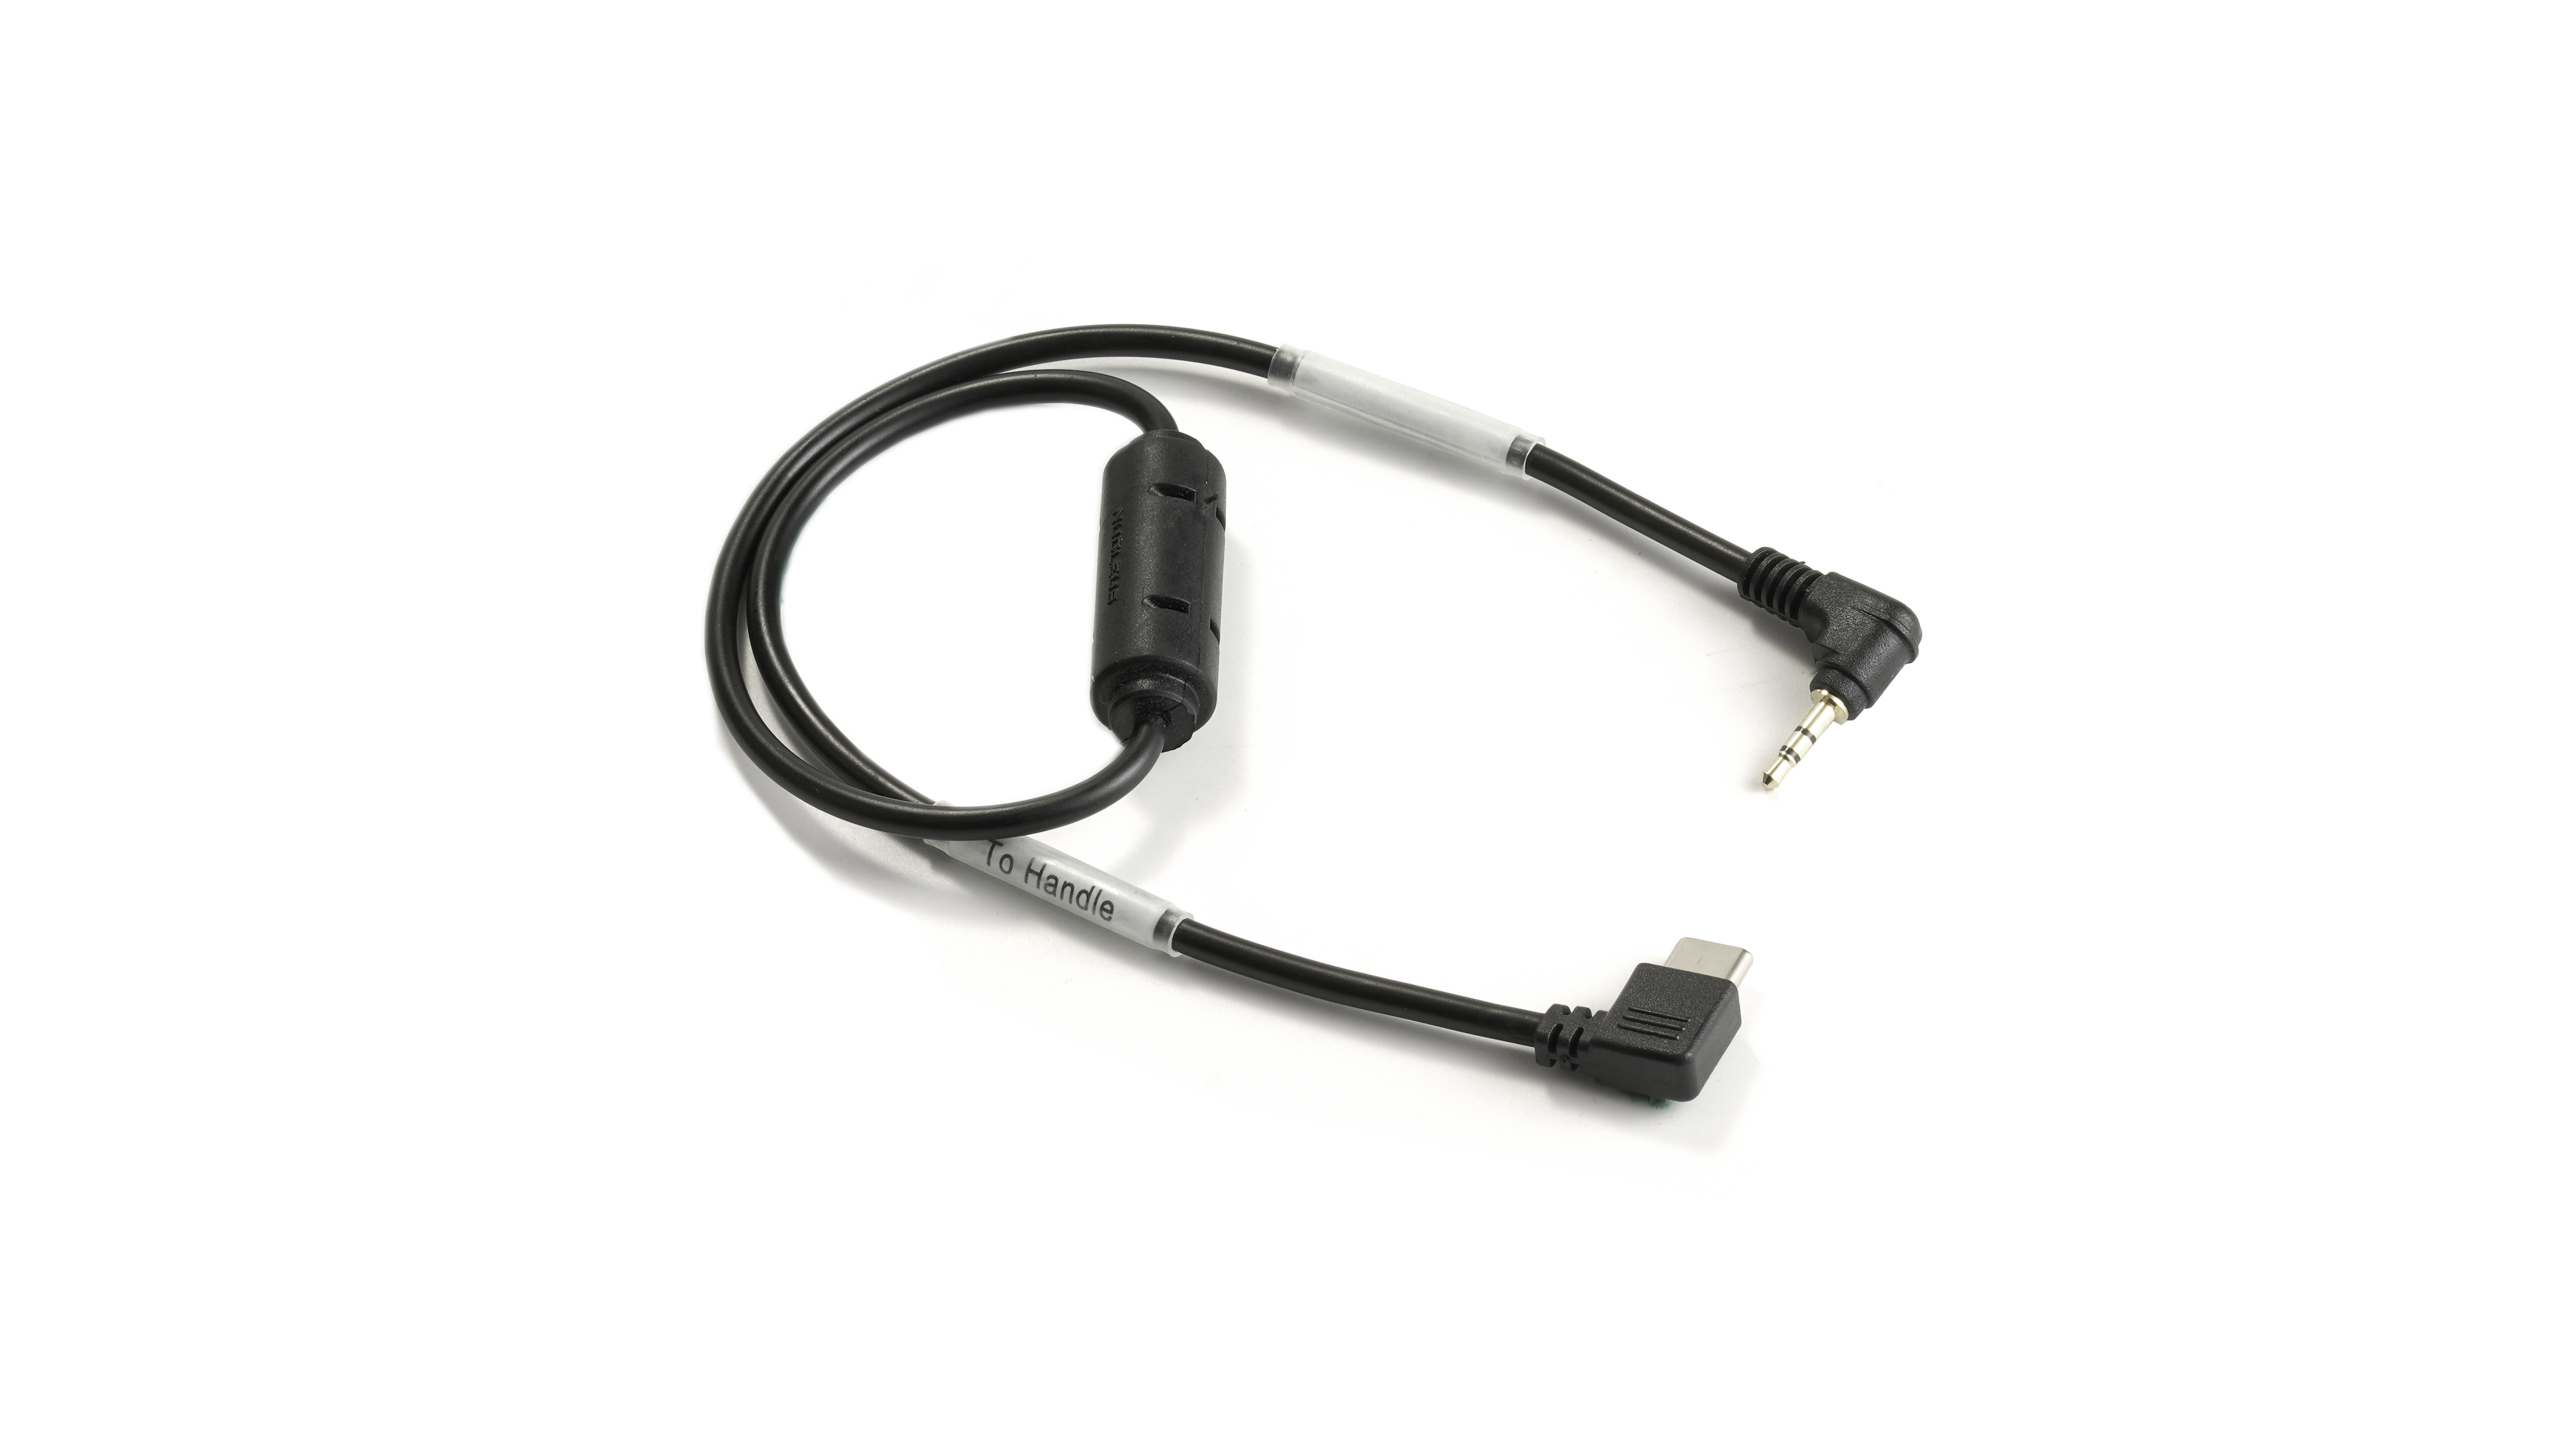 Tilta USB-C Run/Stop Cable for LANC Port